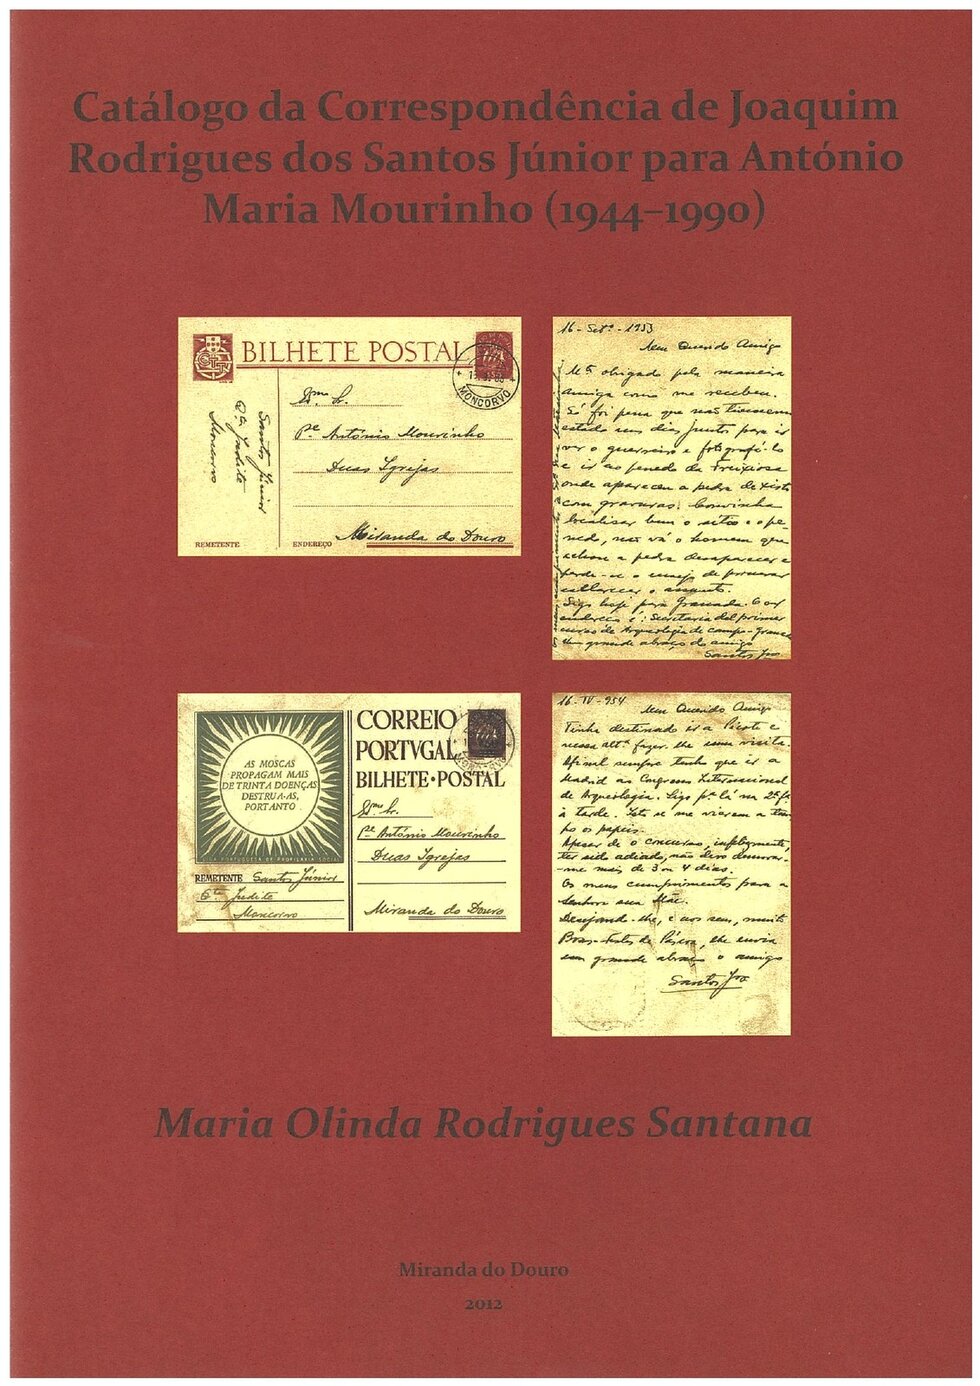 Catalogo de correspondencia de joaquim rodrigues dos santos junior para antonio maria mourinho  1944 1990  page 0001 1 980 2500